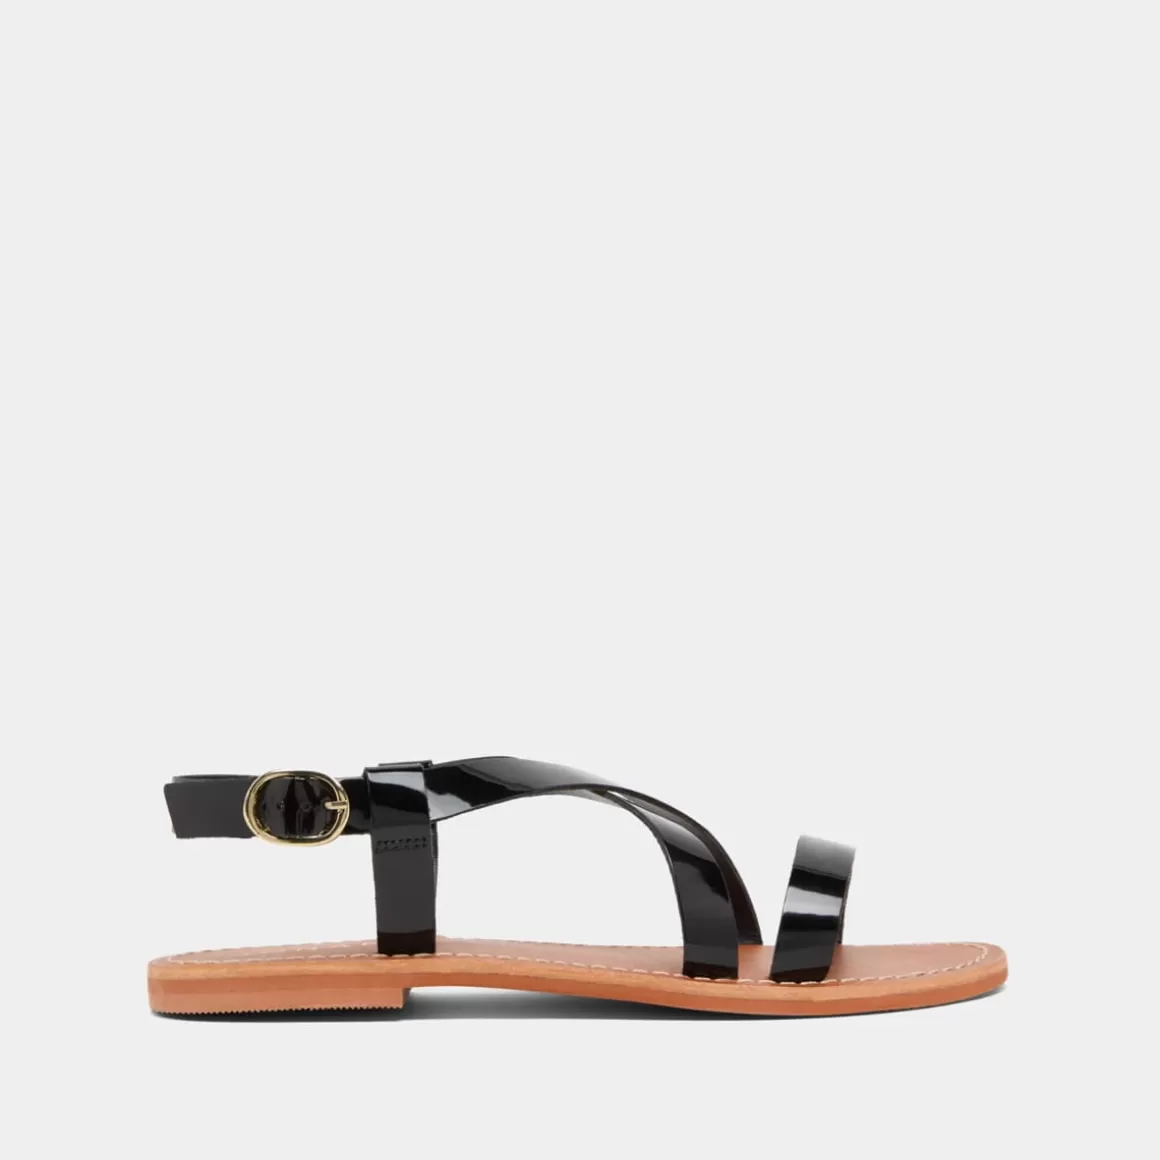 Cross-strap sandals<Jonak Hot